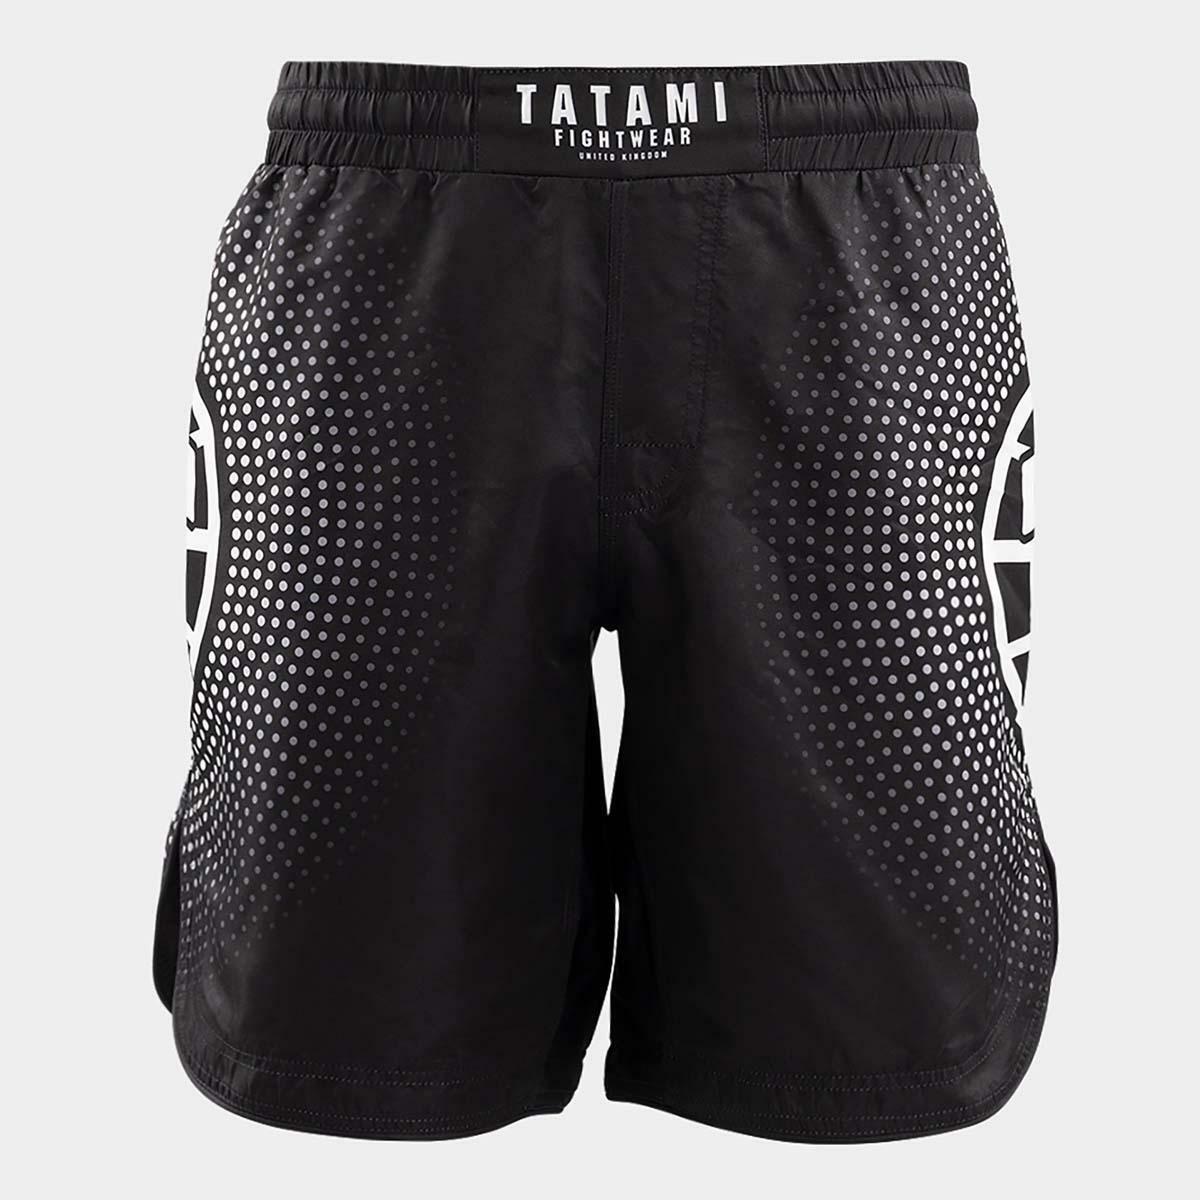 Tatami Shockwave Grappling Shorts TATGS33BK